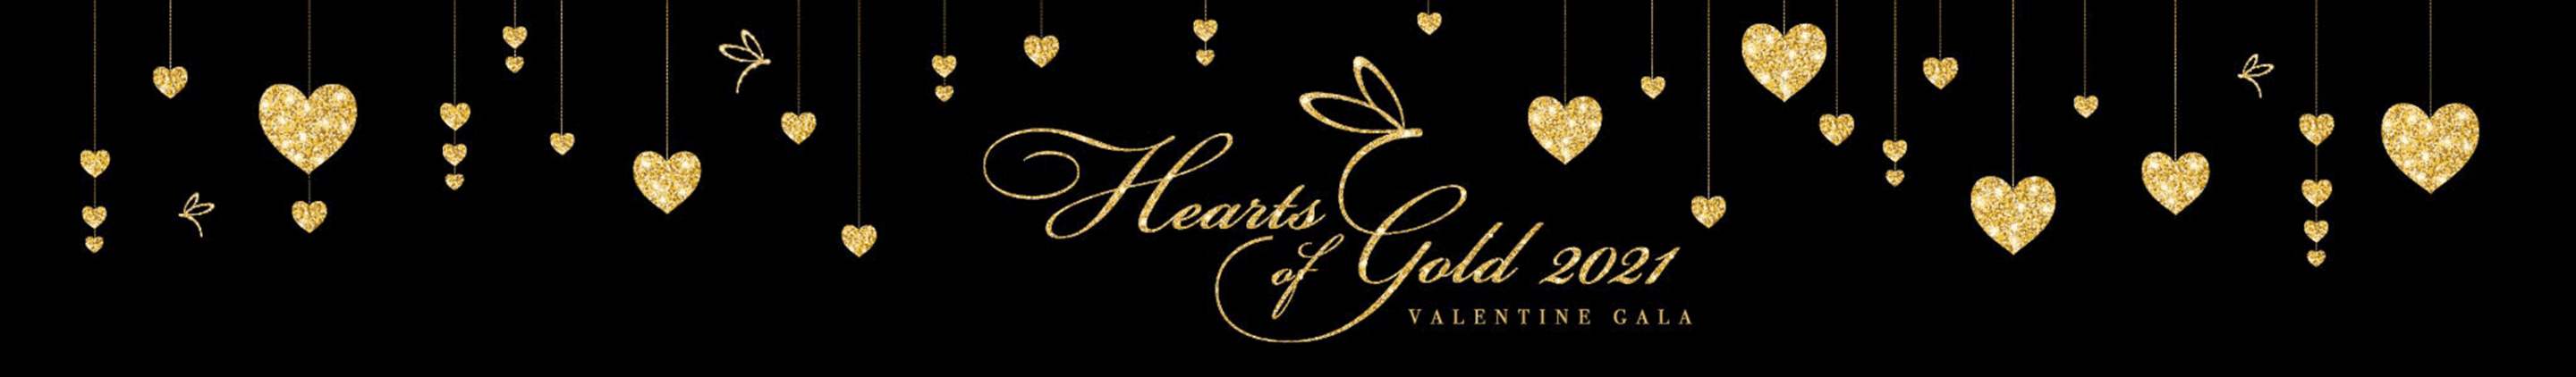 Hearts of Gold 2021 Valentine Gala